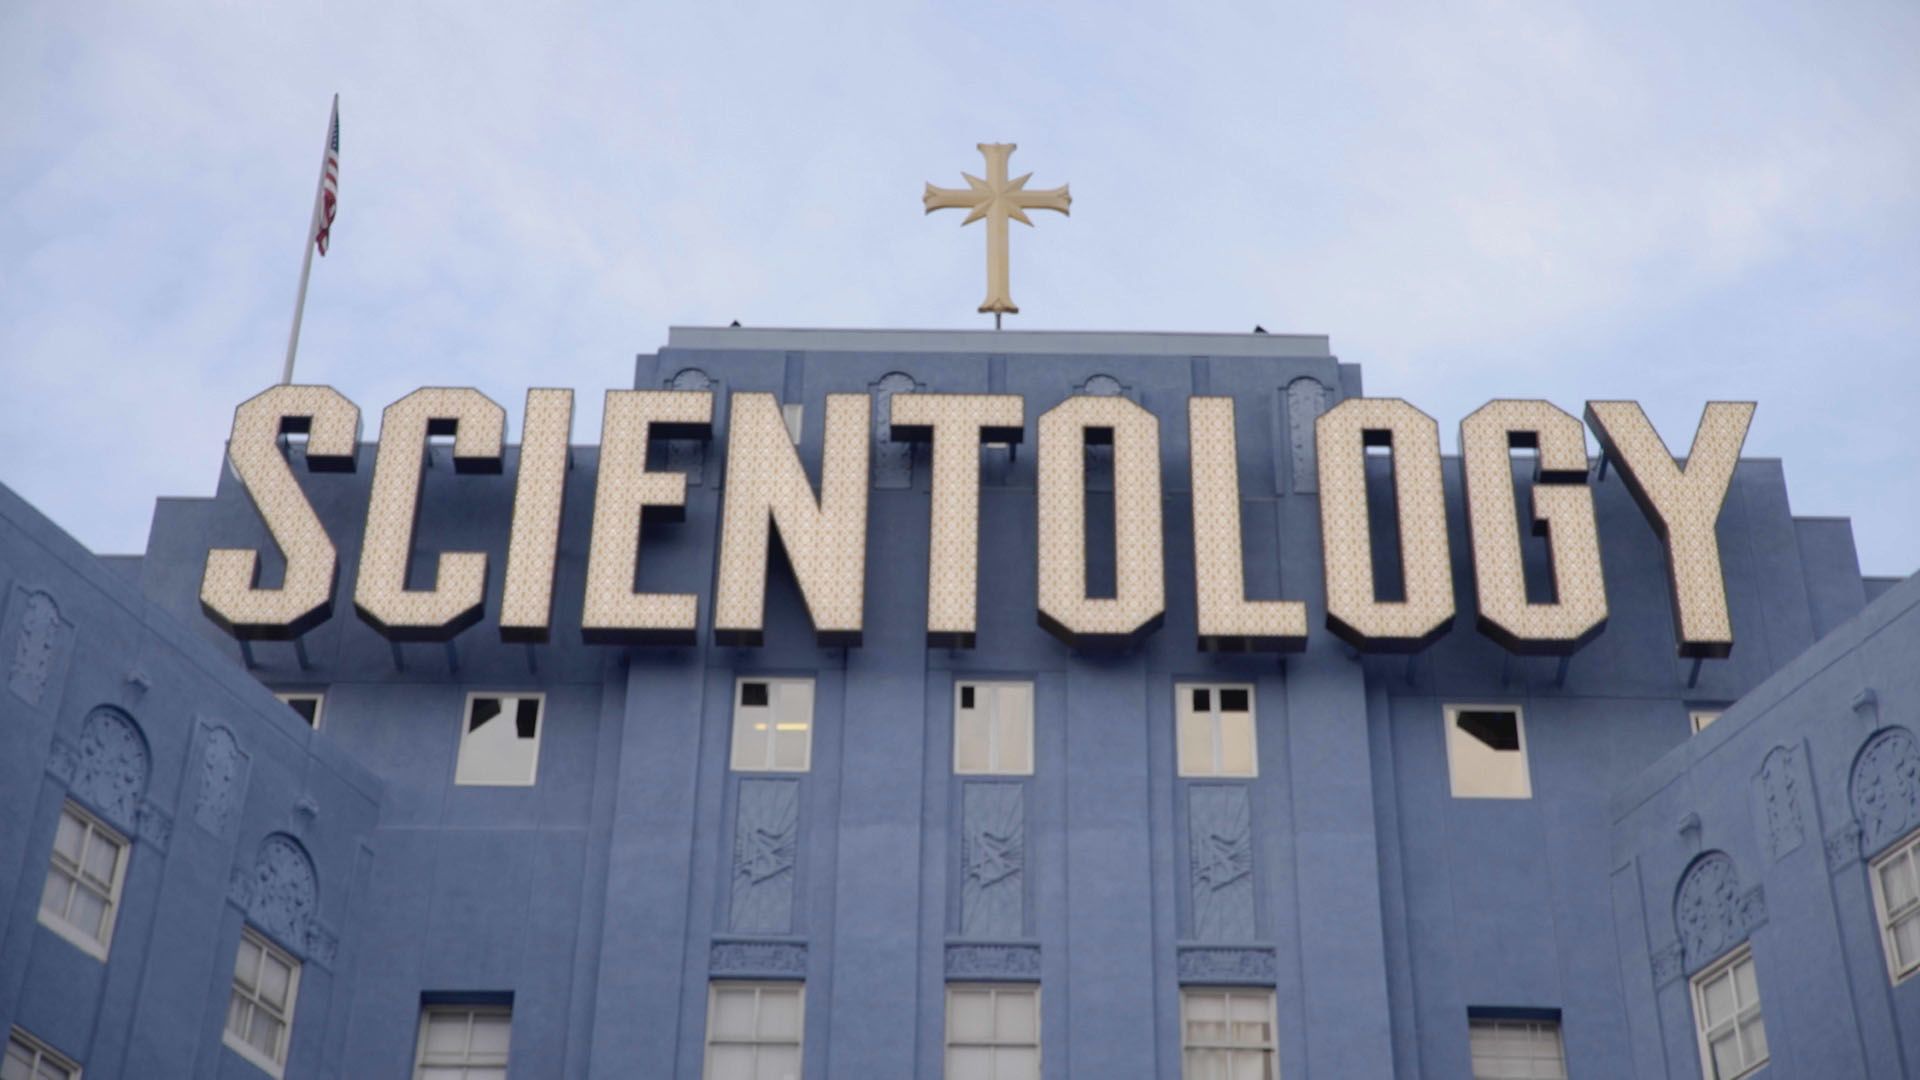 Scientology's Beliefs and Practices